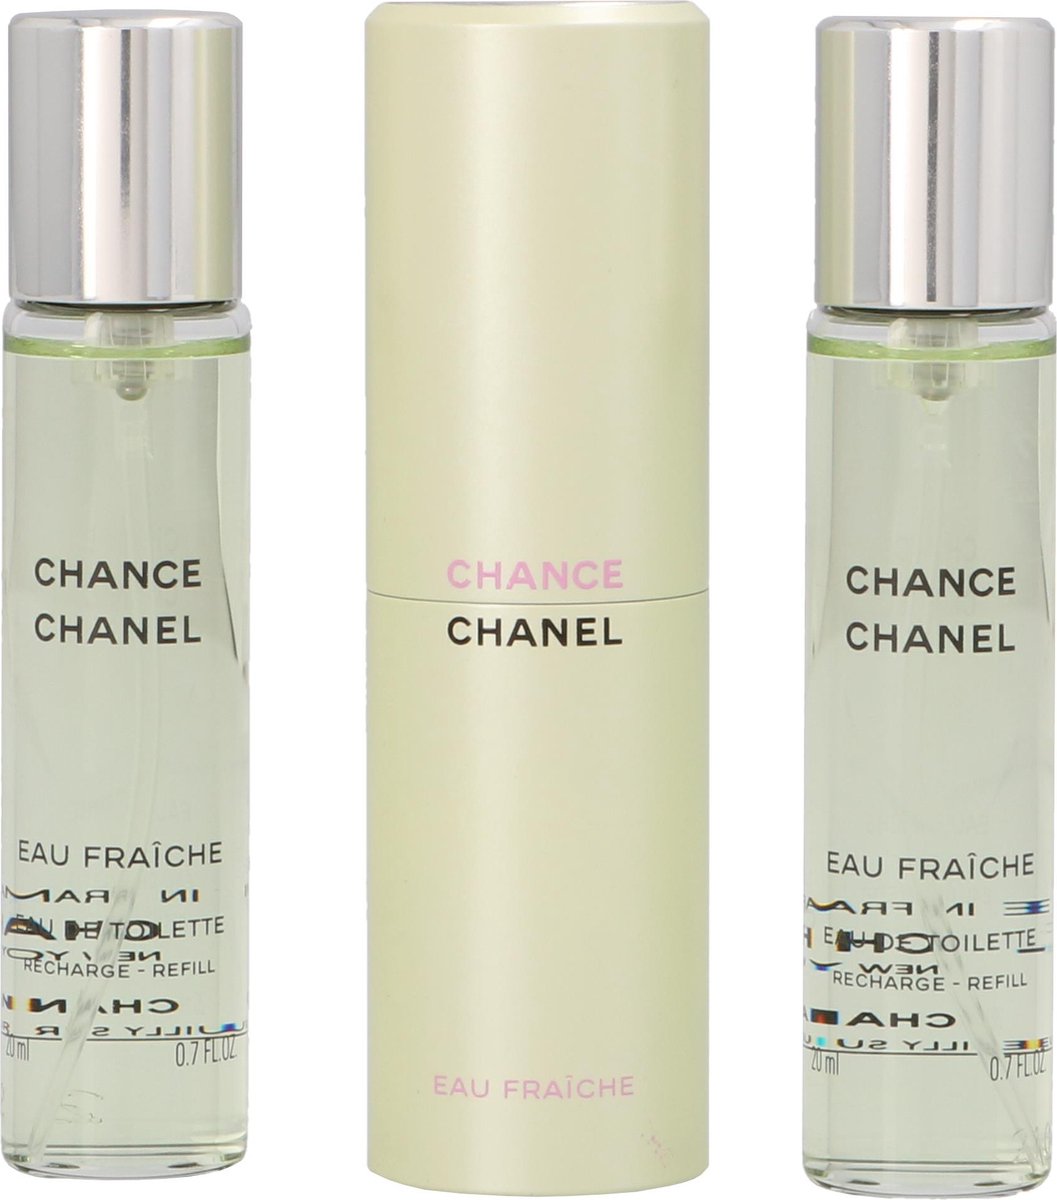 Chanel Chance Eau Fraiche Nachfüllungen 3 x 20 ml